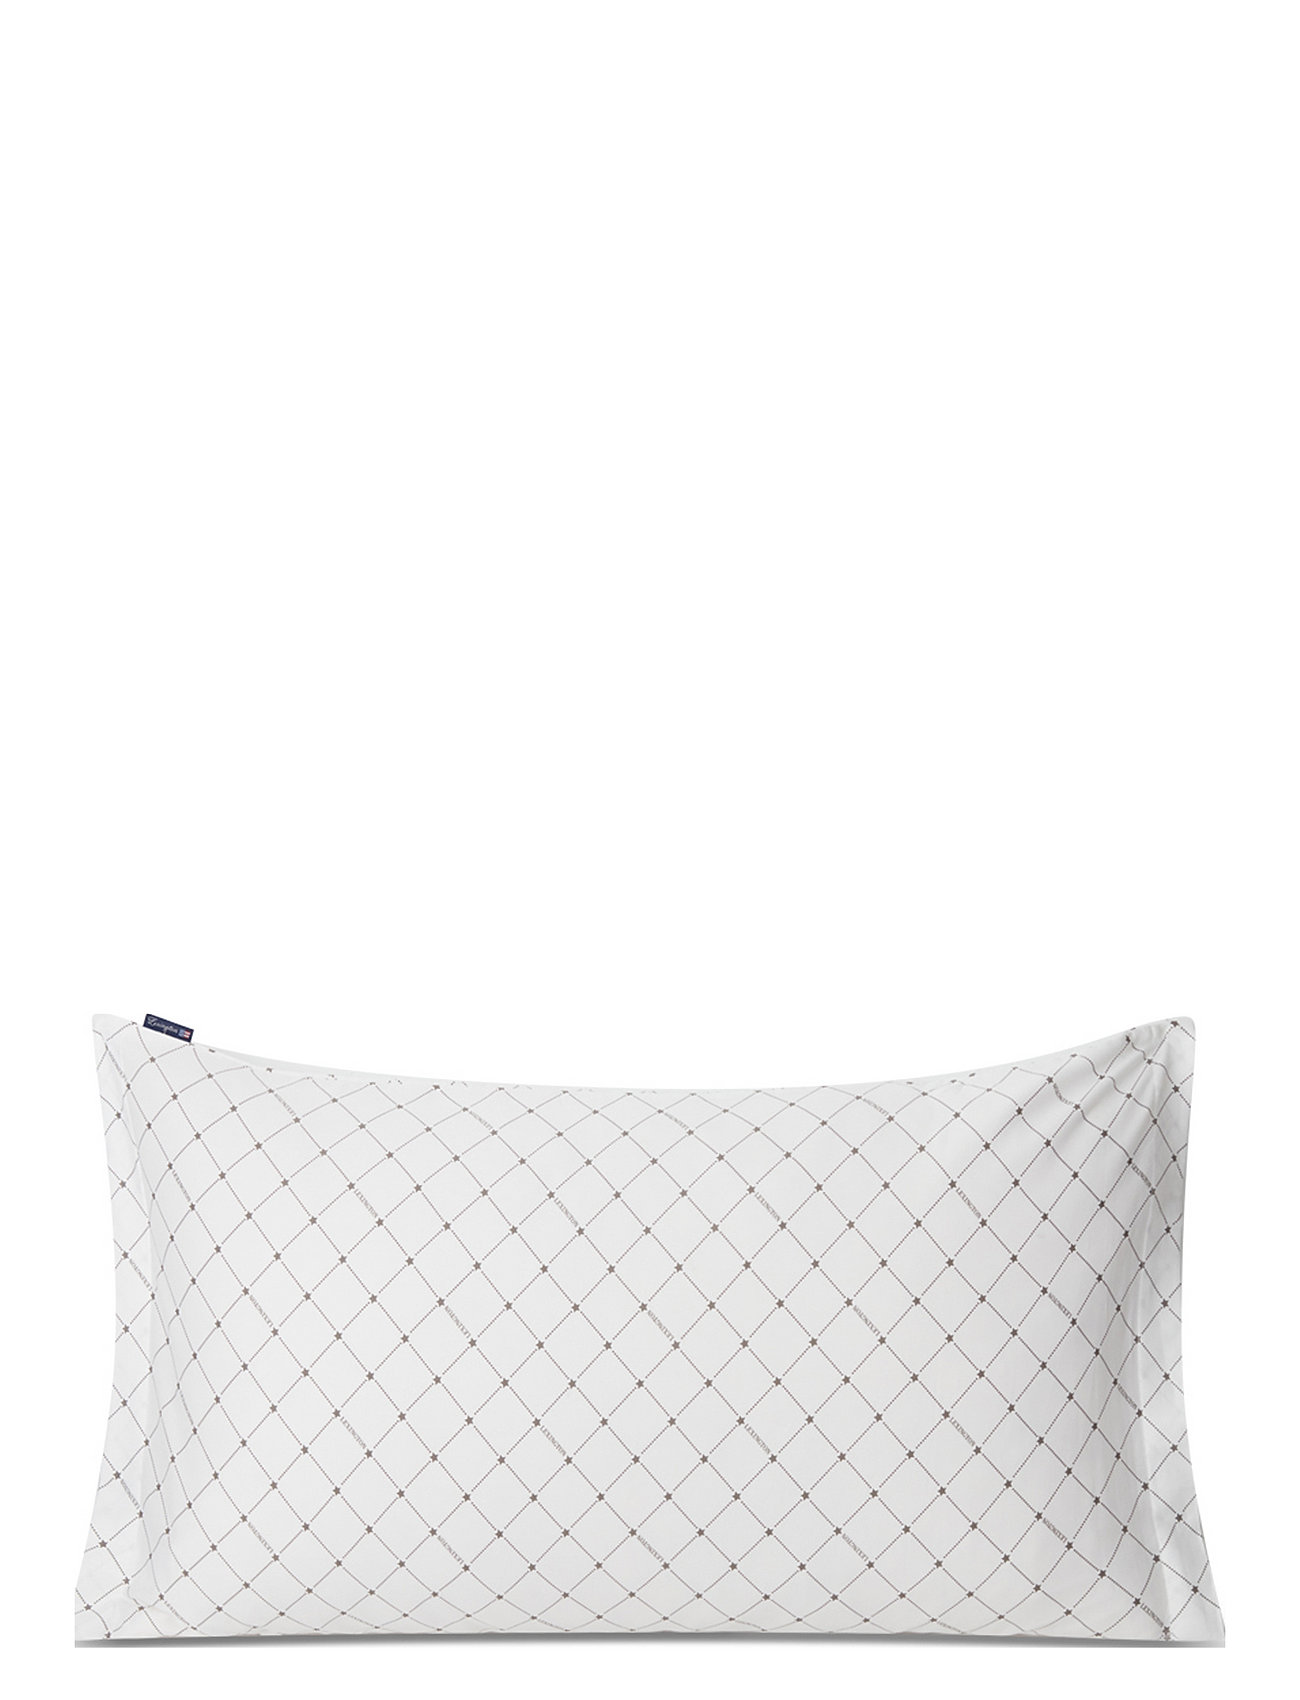 White/Gray Signature Star Sateen Pillowcase Home Textiles Bedtextiles Pillow Cases White Lexington Home